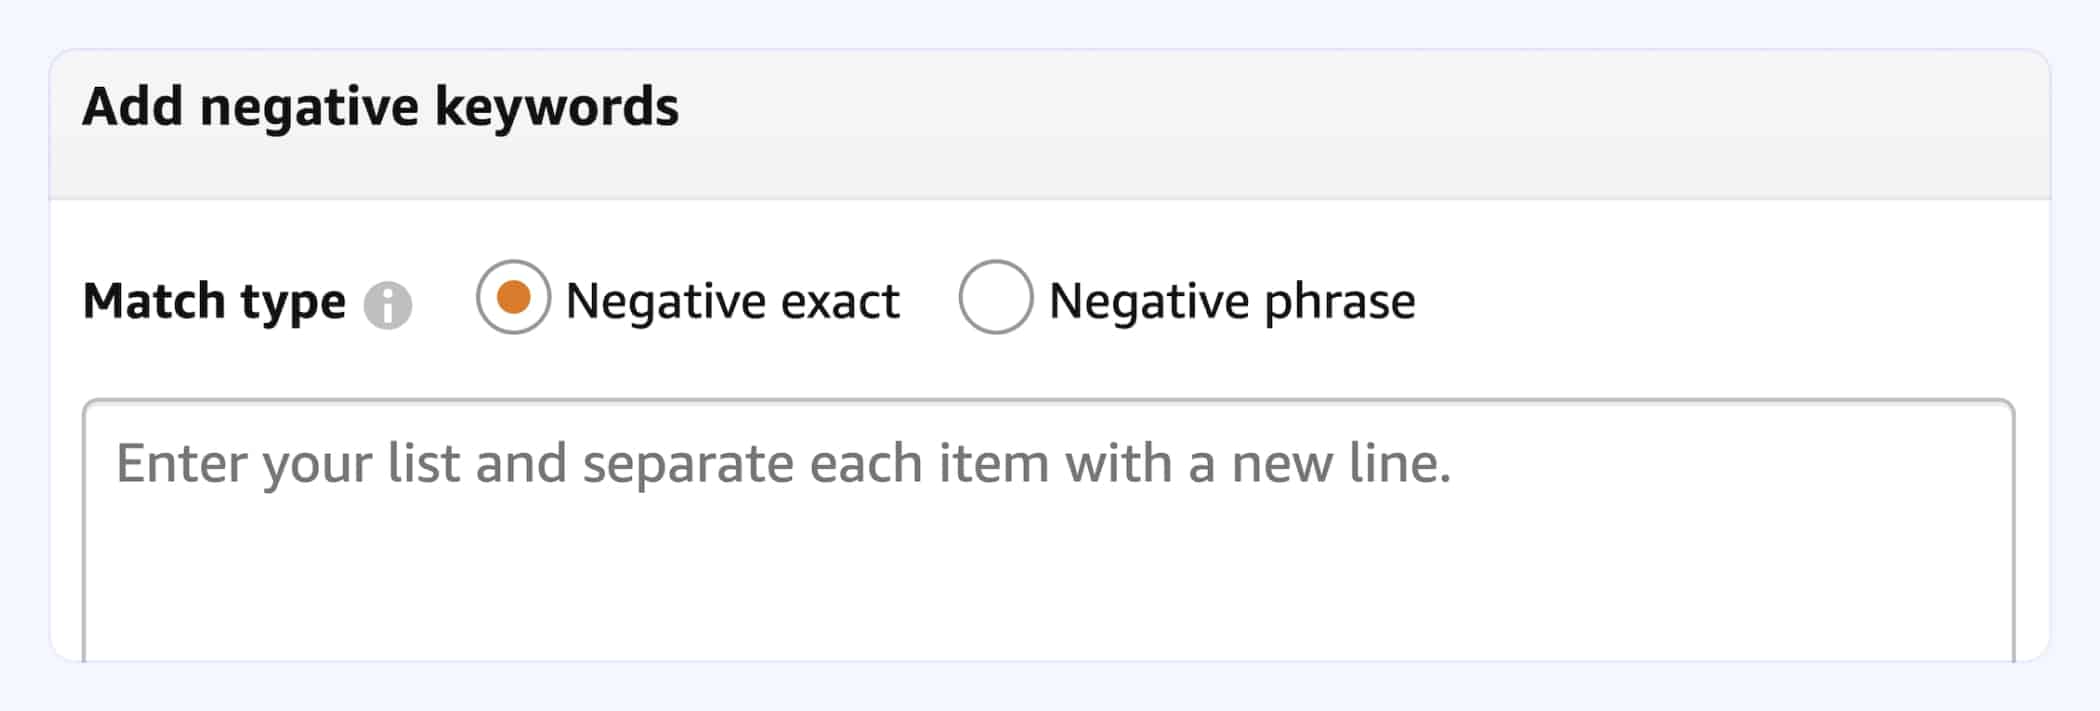 How to Add Negative Exact Keywords on Amazon